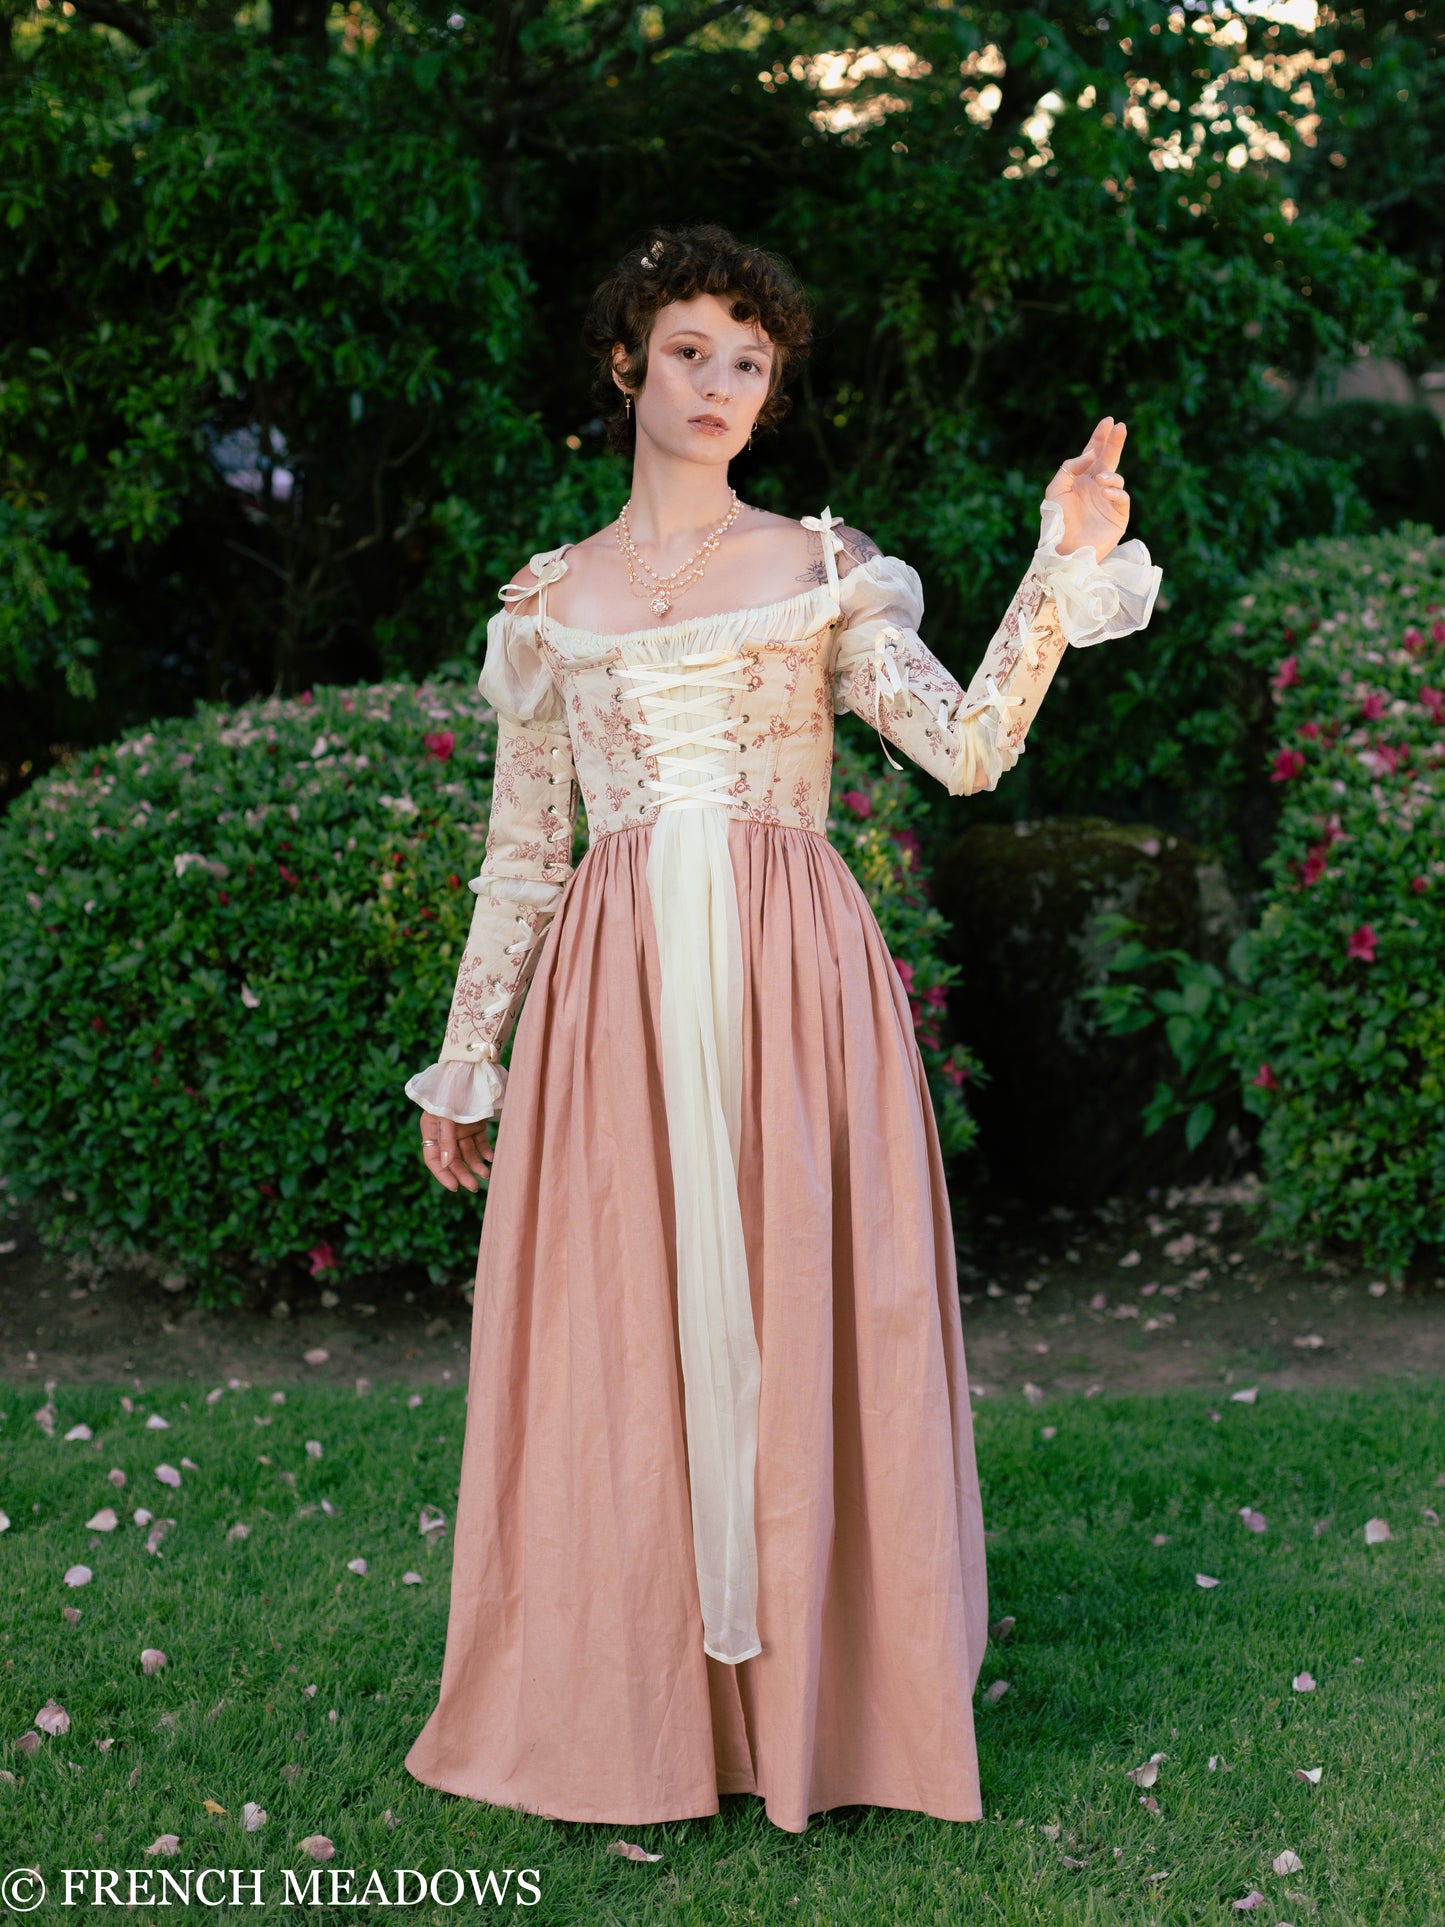 Waldena collectible boned corset & cotton French dress set